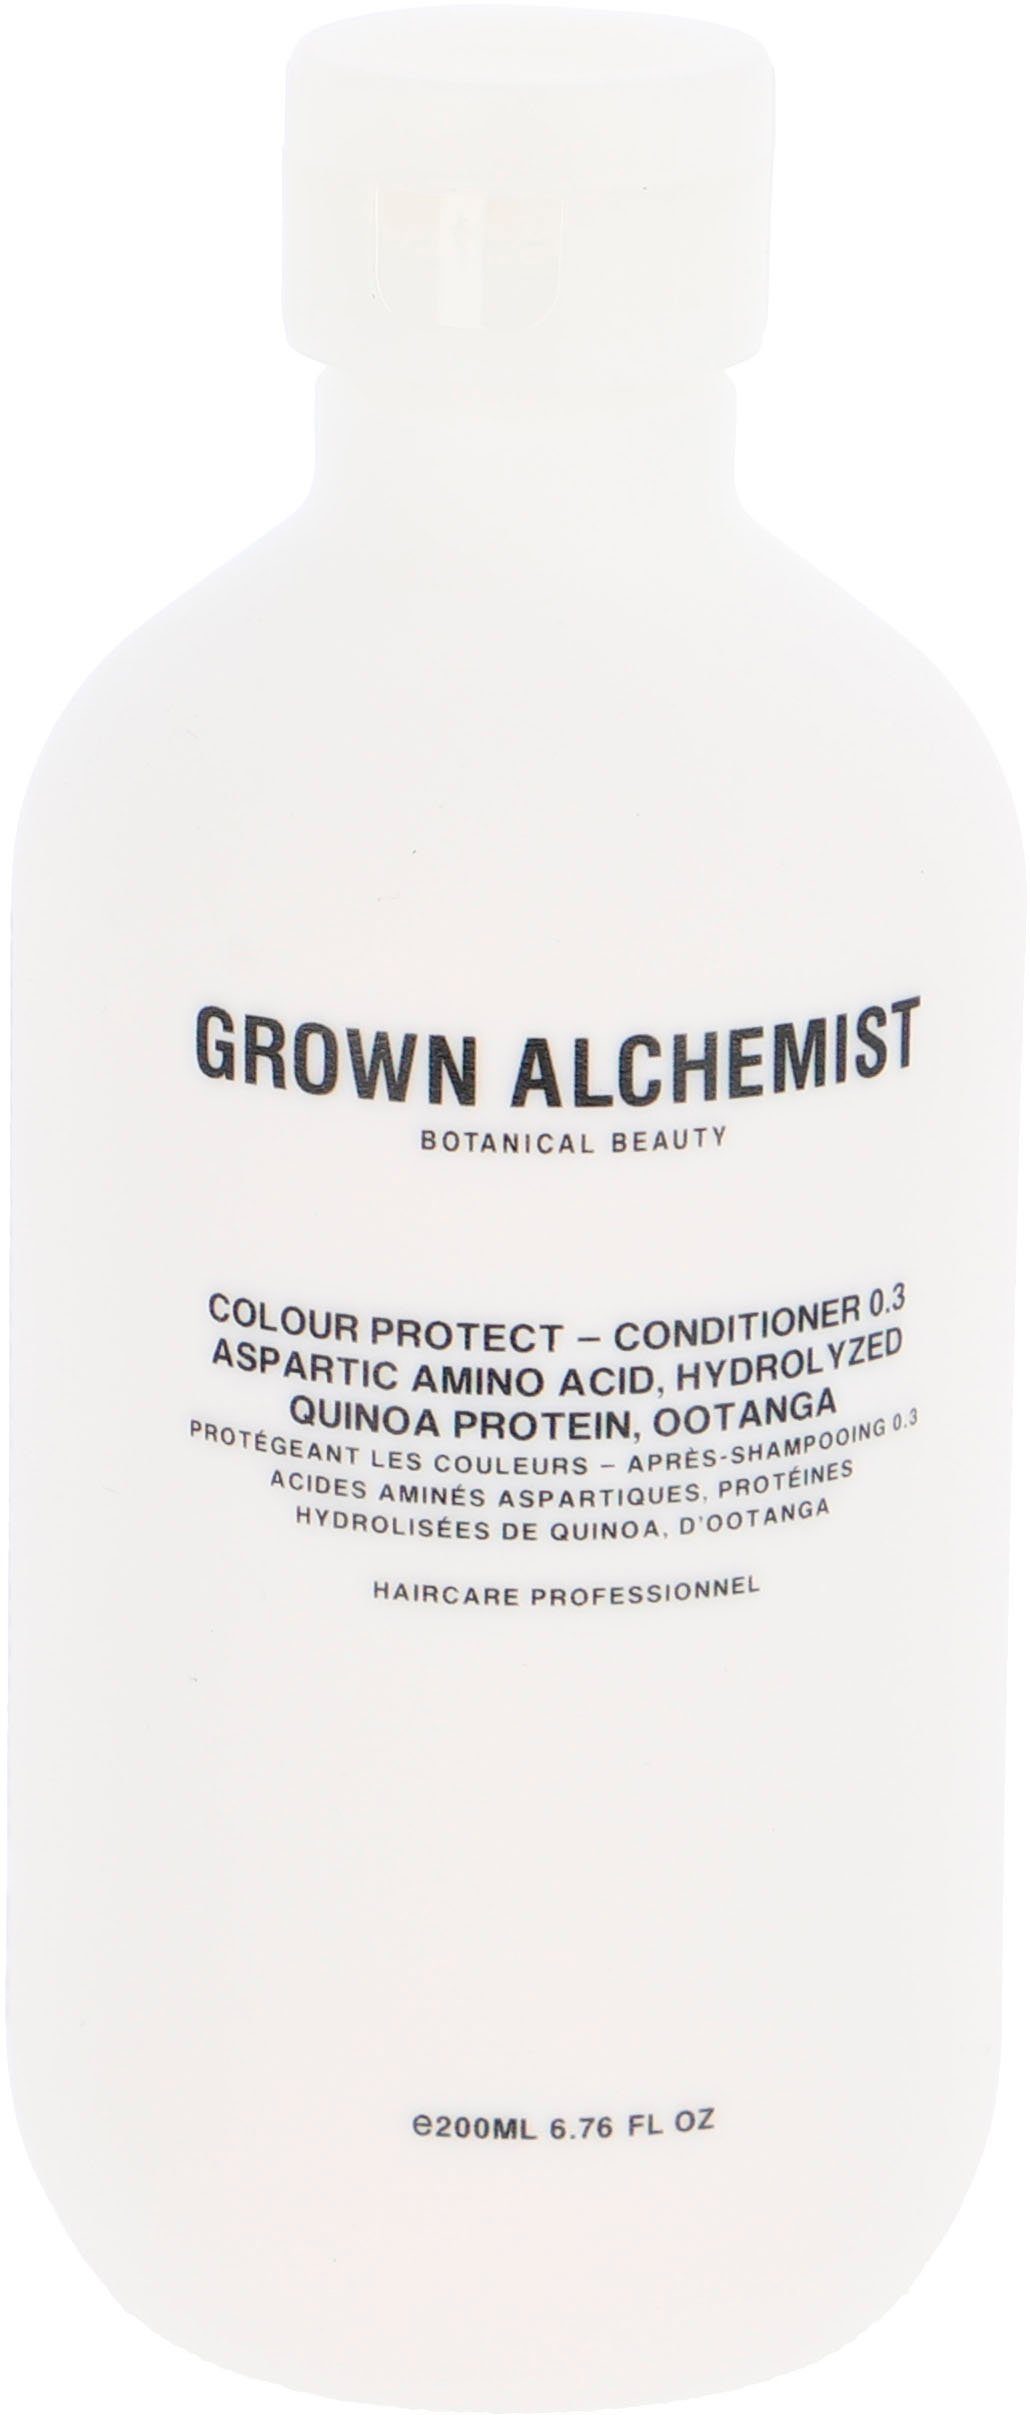 Protect Colour ALCHEMIST Amino Conditioner Acid, Haarspülung GROWN Ootanga Hydrolyzed Quinoa - Protein, Aspartic 0.3,